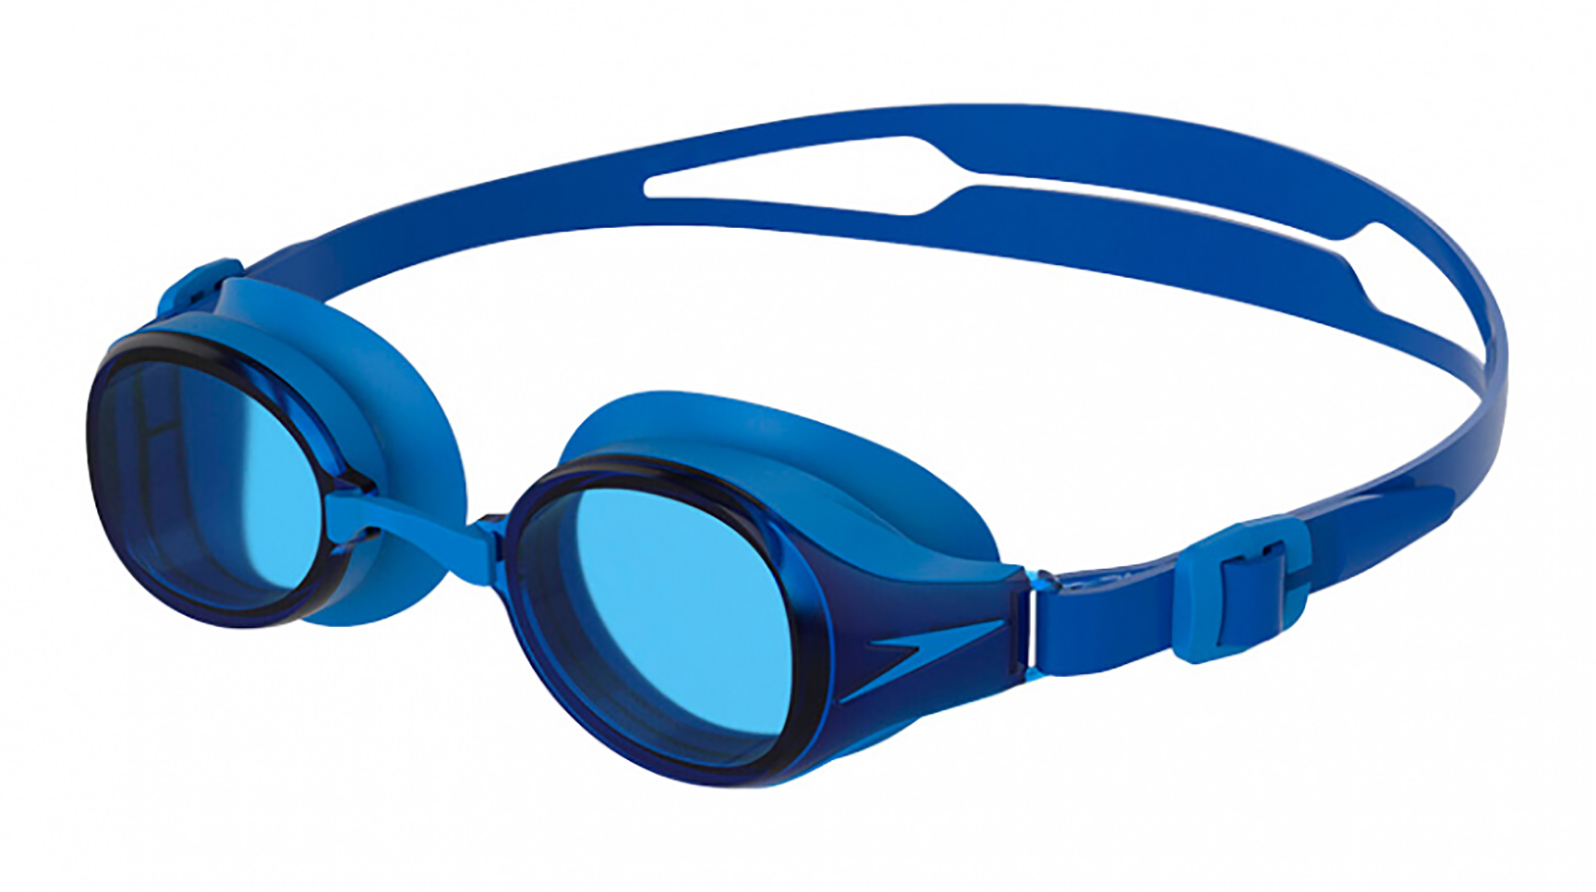 Speedo Очки для плавания Hydropure Optical F809 -3,5 speedo очки для плавания hydropure optical f809 3 5